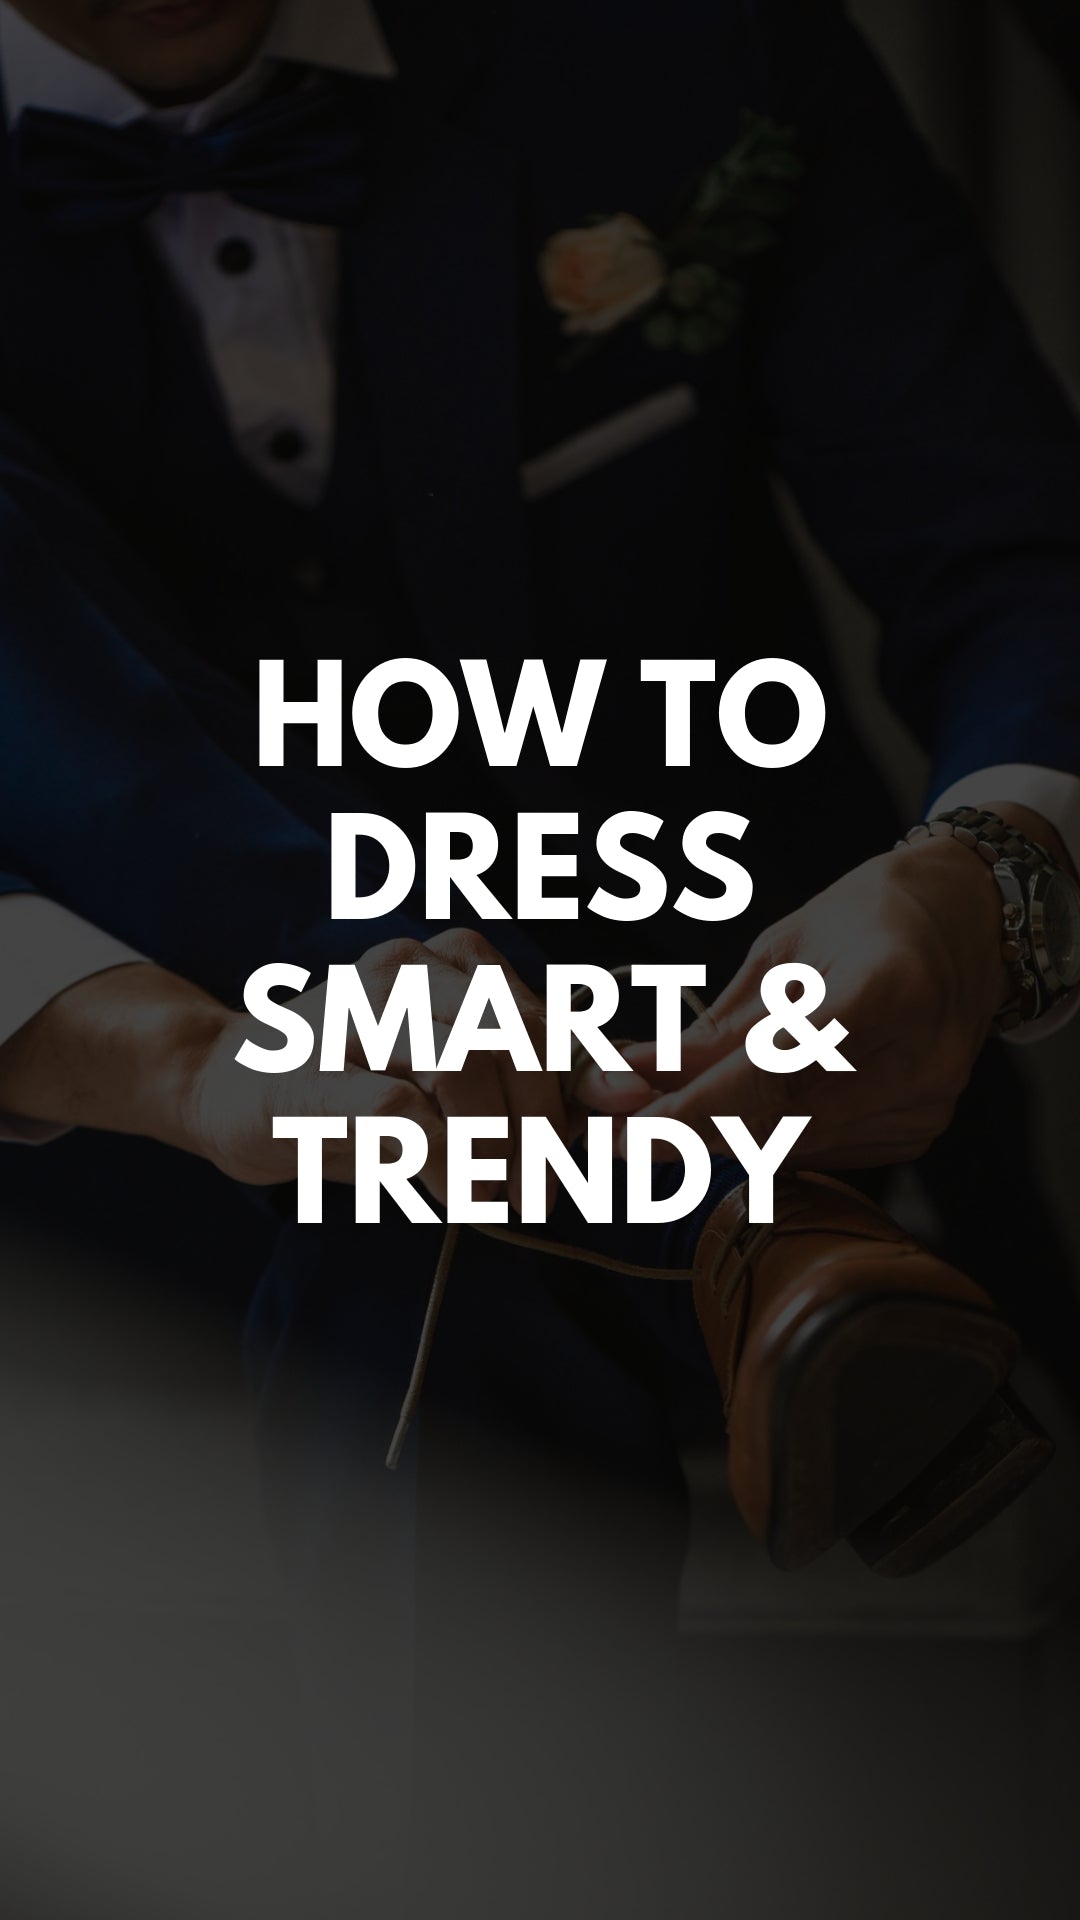 HOW TO DRESS SMART & TRENDY